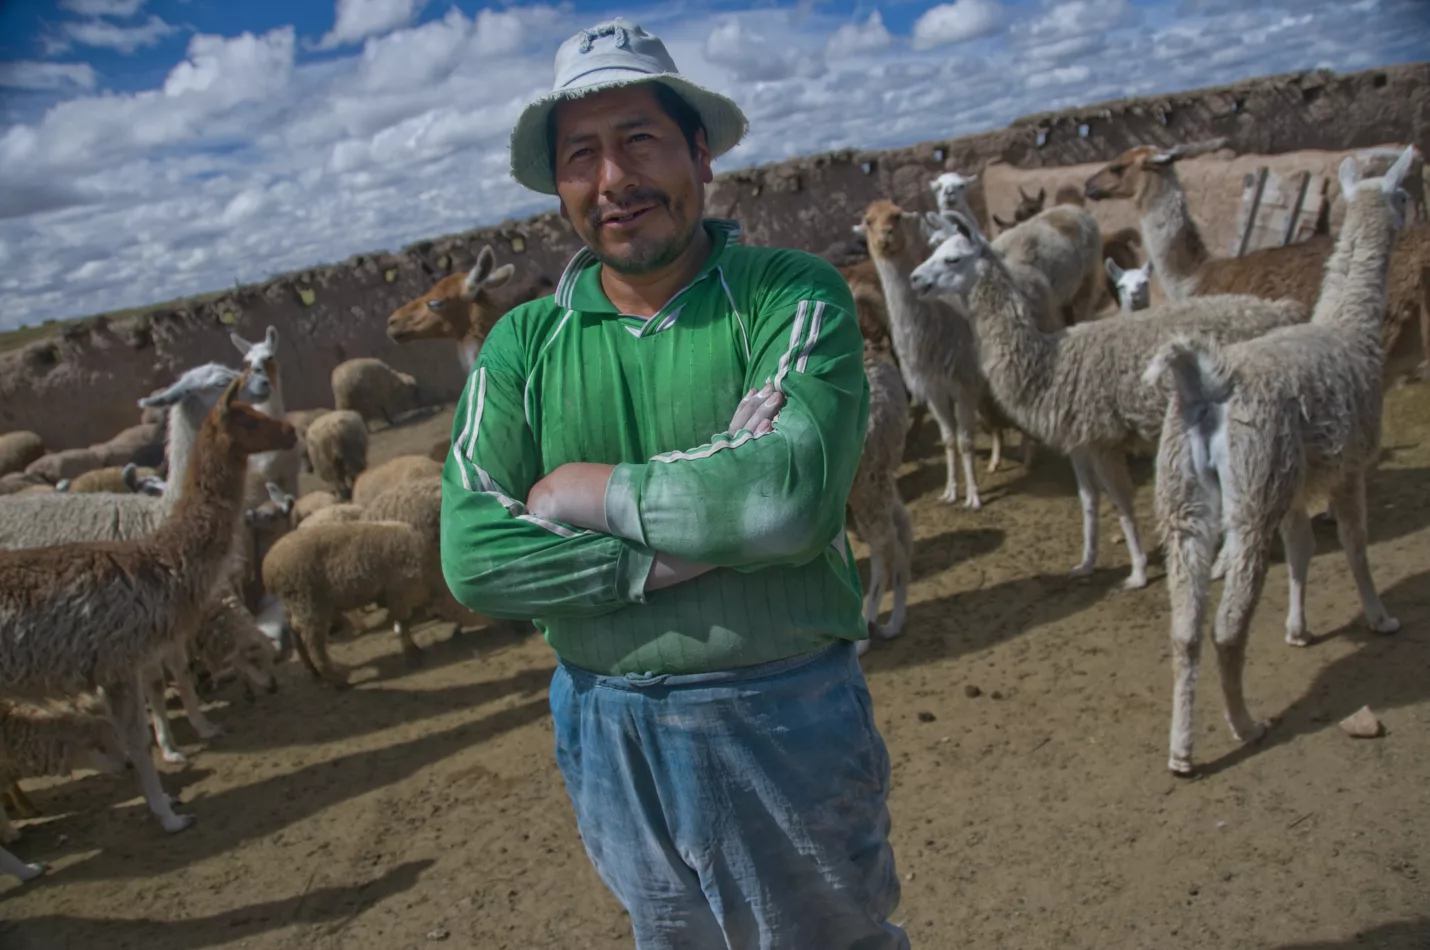 Rural customer in Bolivia